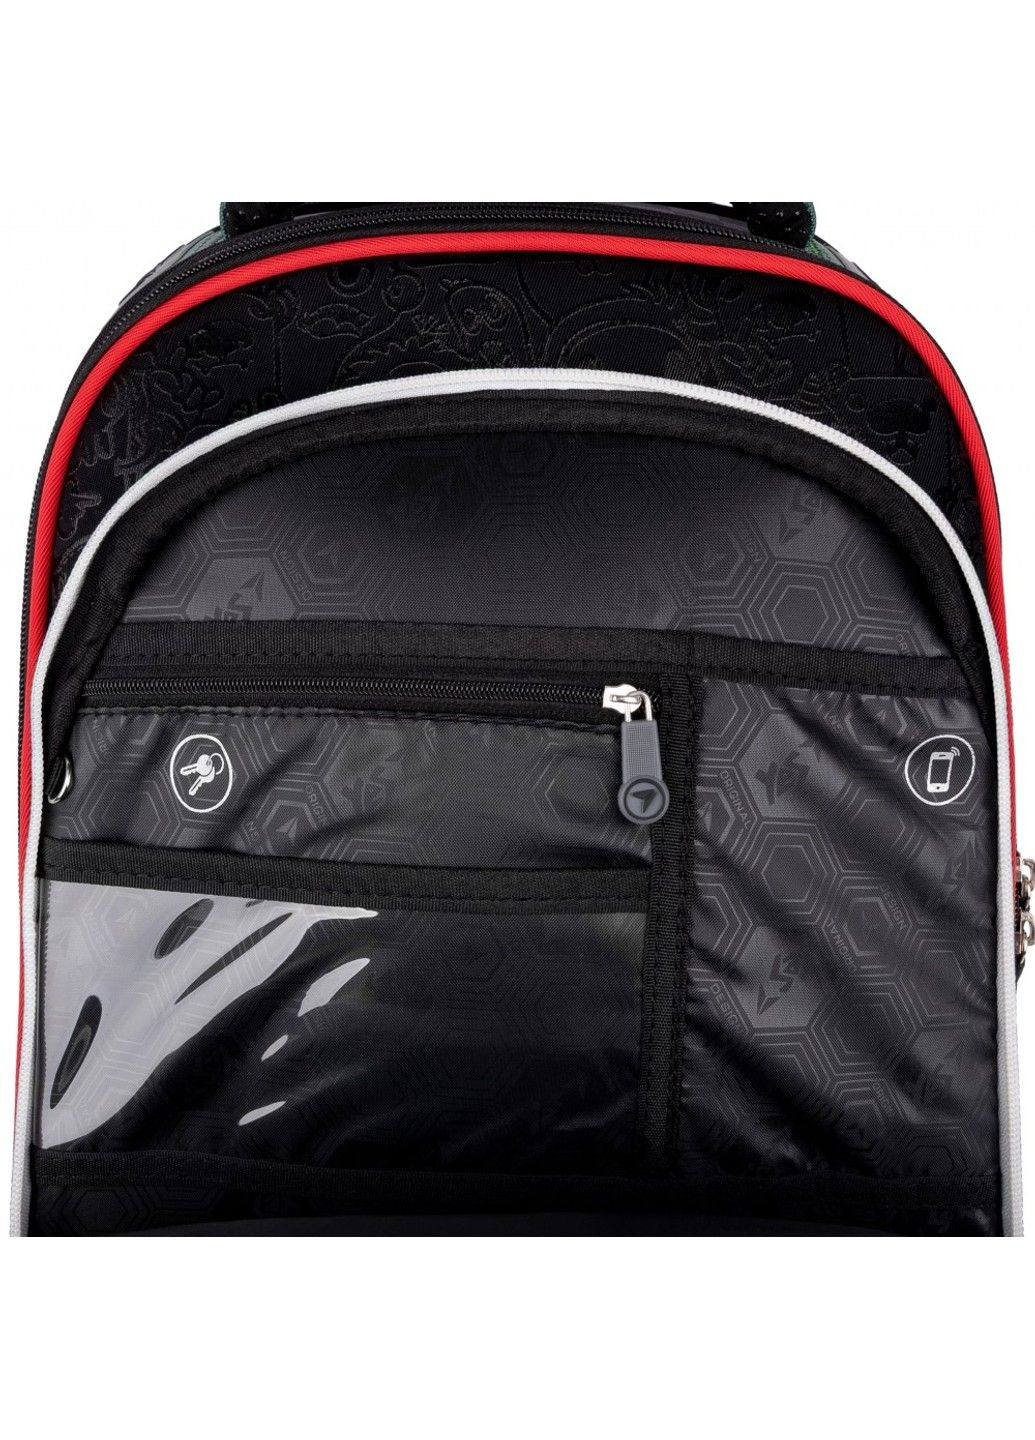 Рюкзак школьный для младших классов S-30 JUNO ULTRA Premium Monsters Yes (278404525)